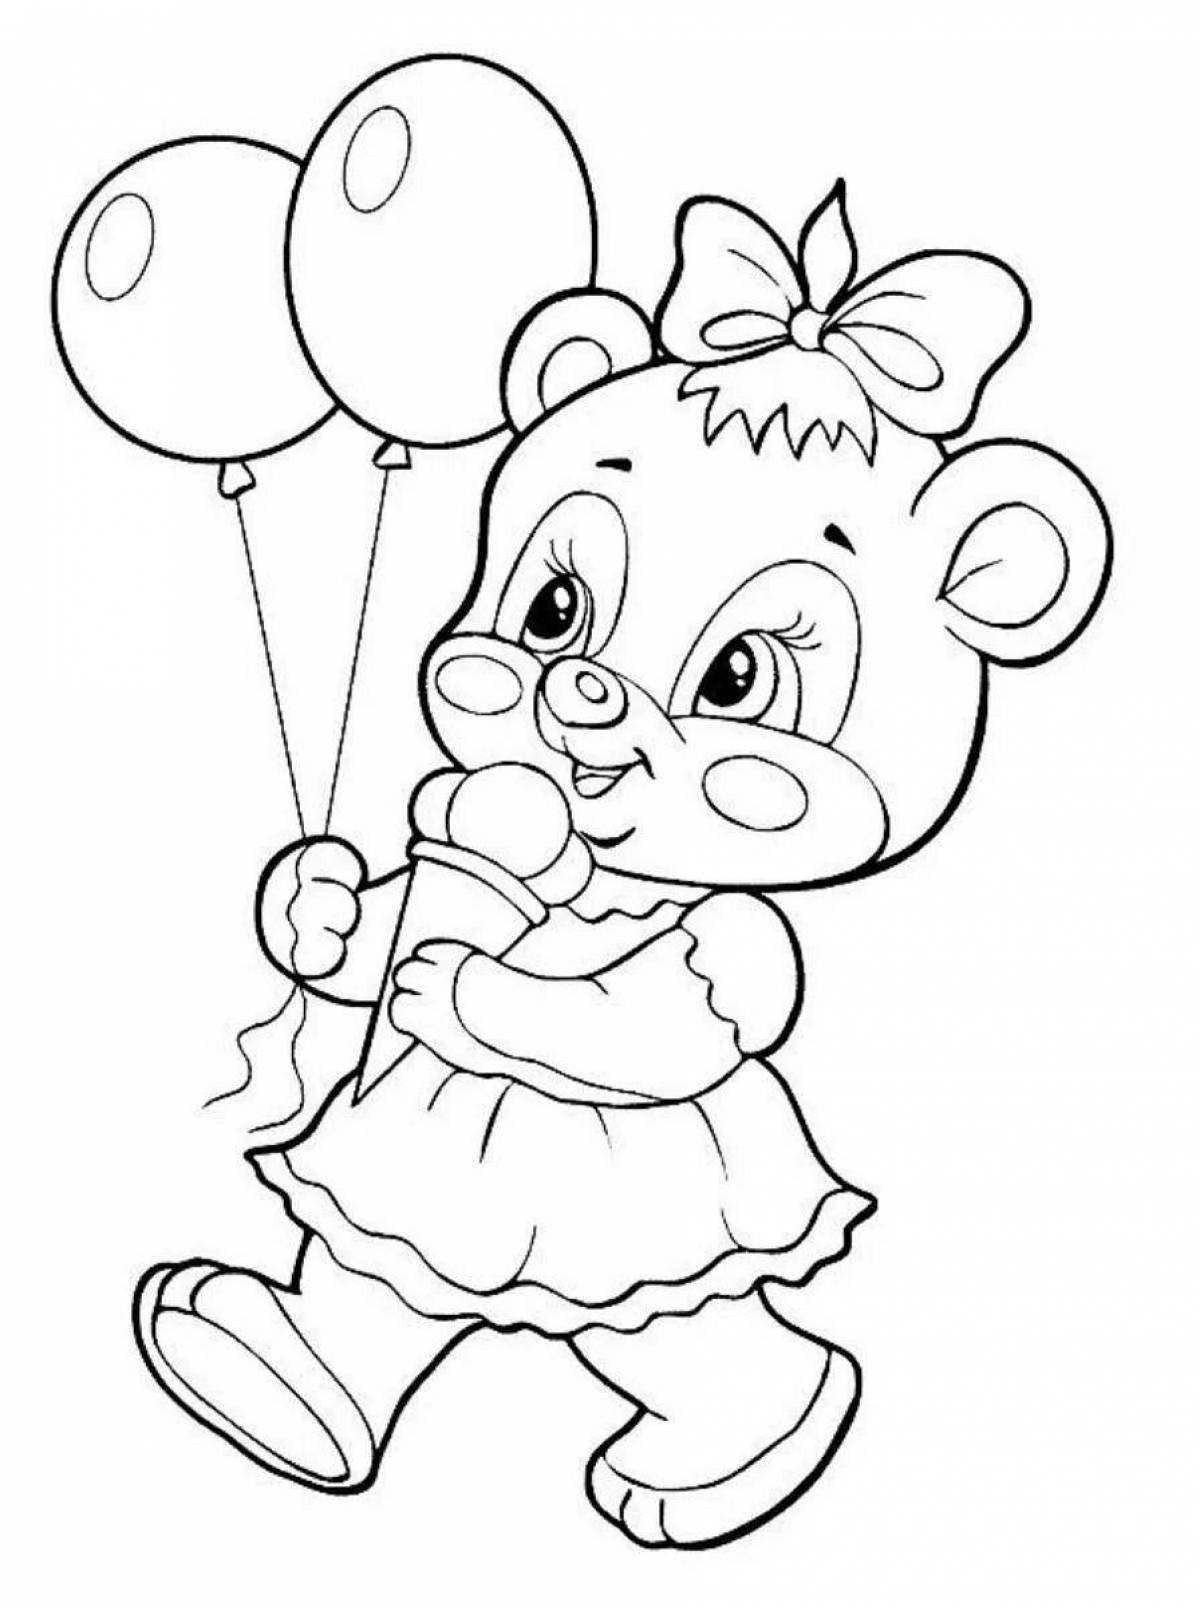 Loving bear coloring page